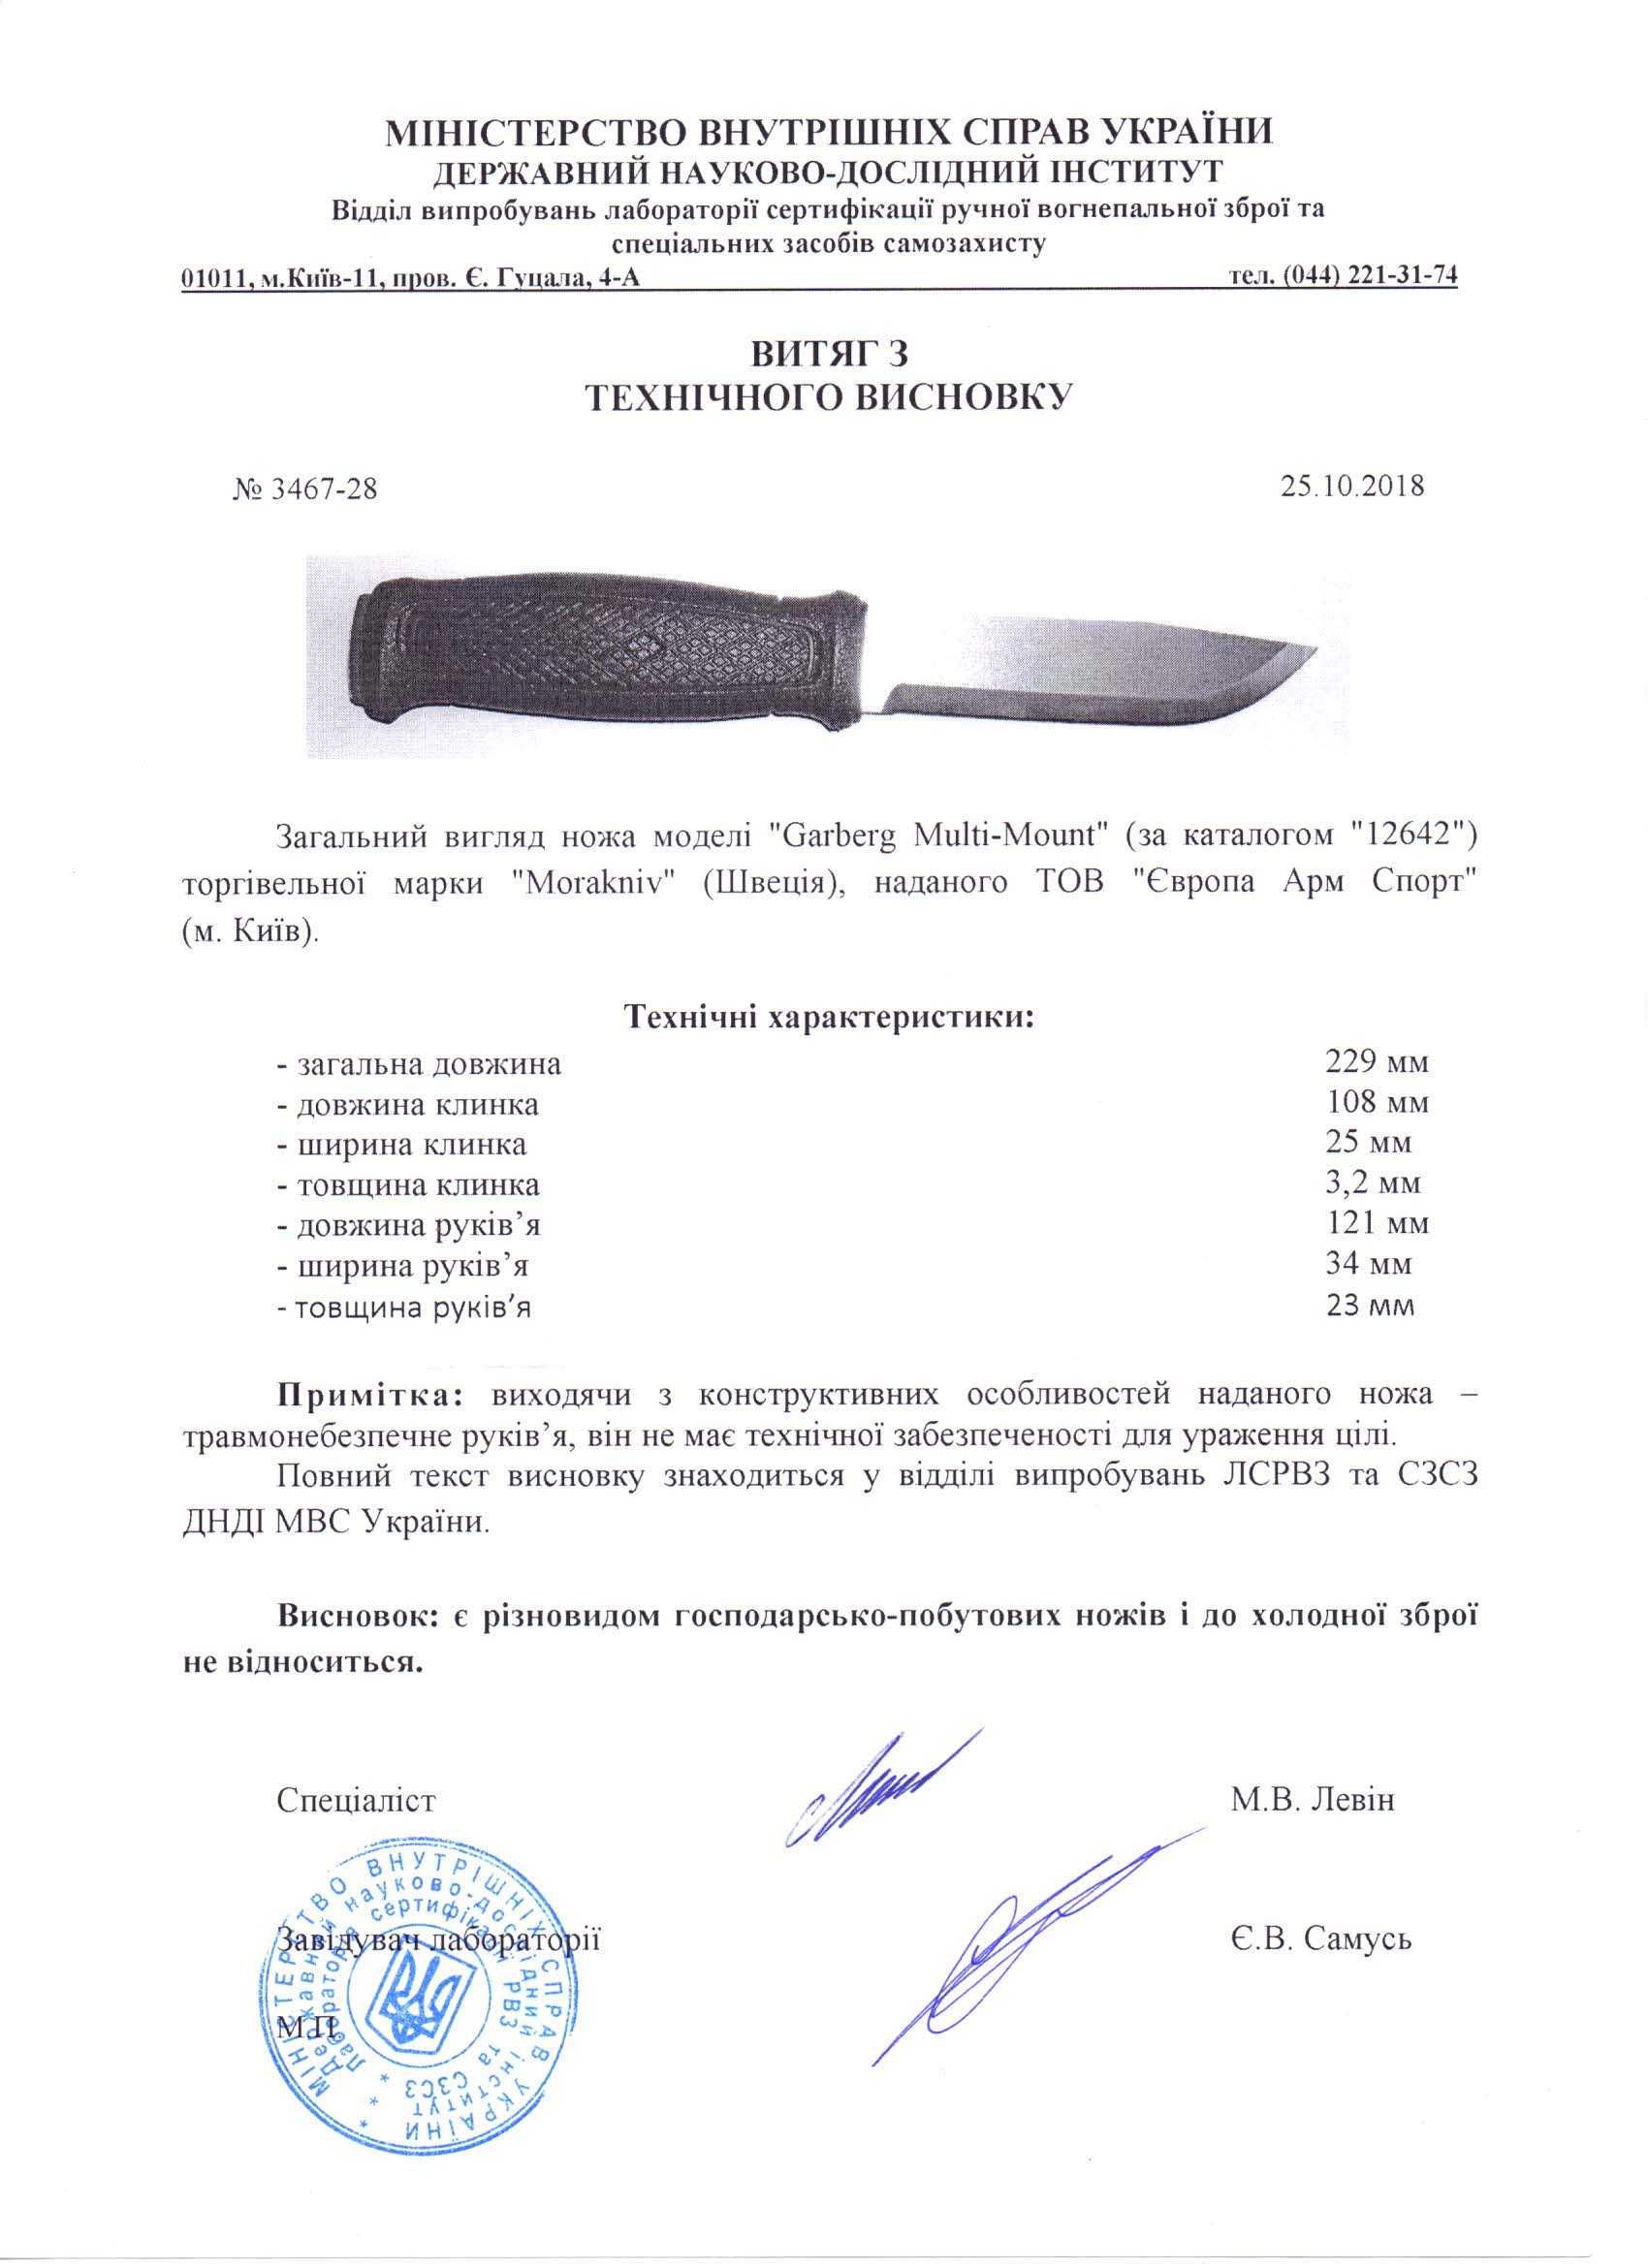 НОЖ MORAKNIV kansbol-garberg 2000  не скланой,нож туриста хит продаж